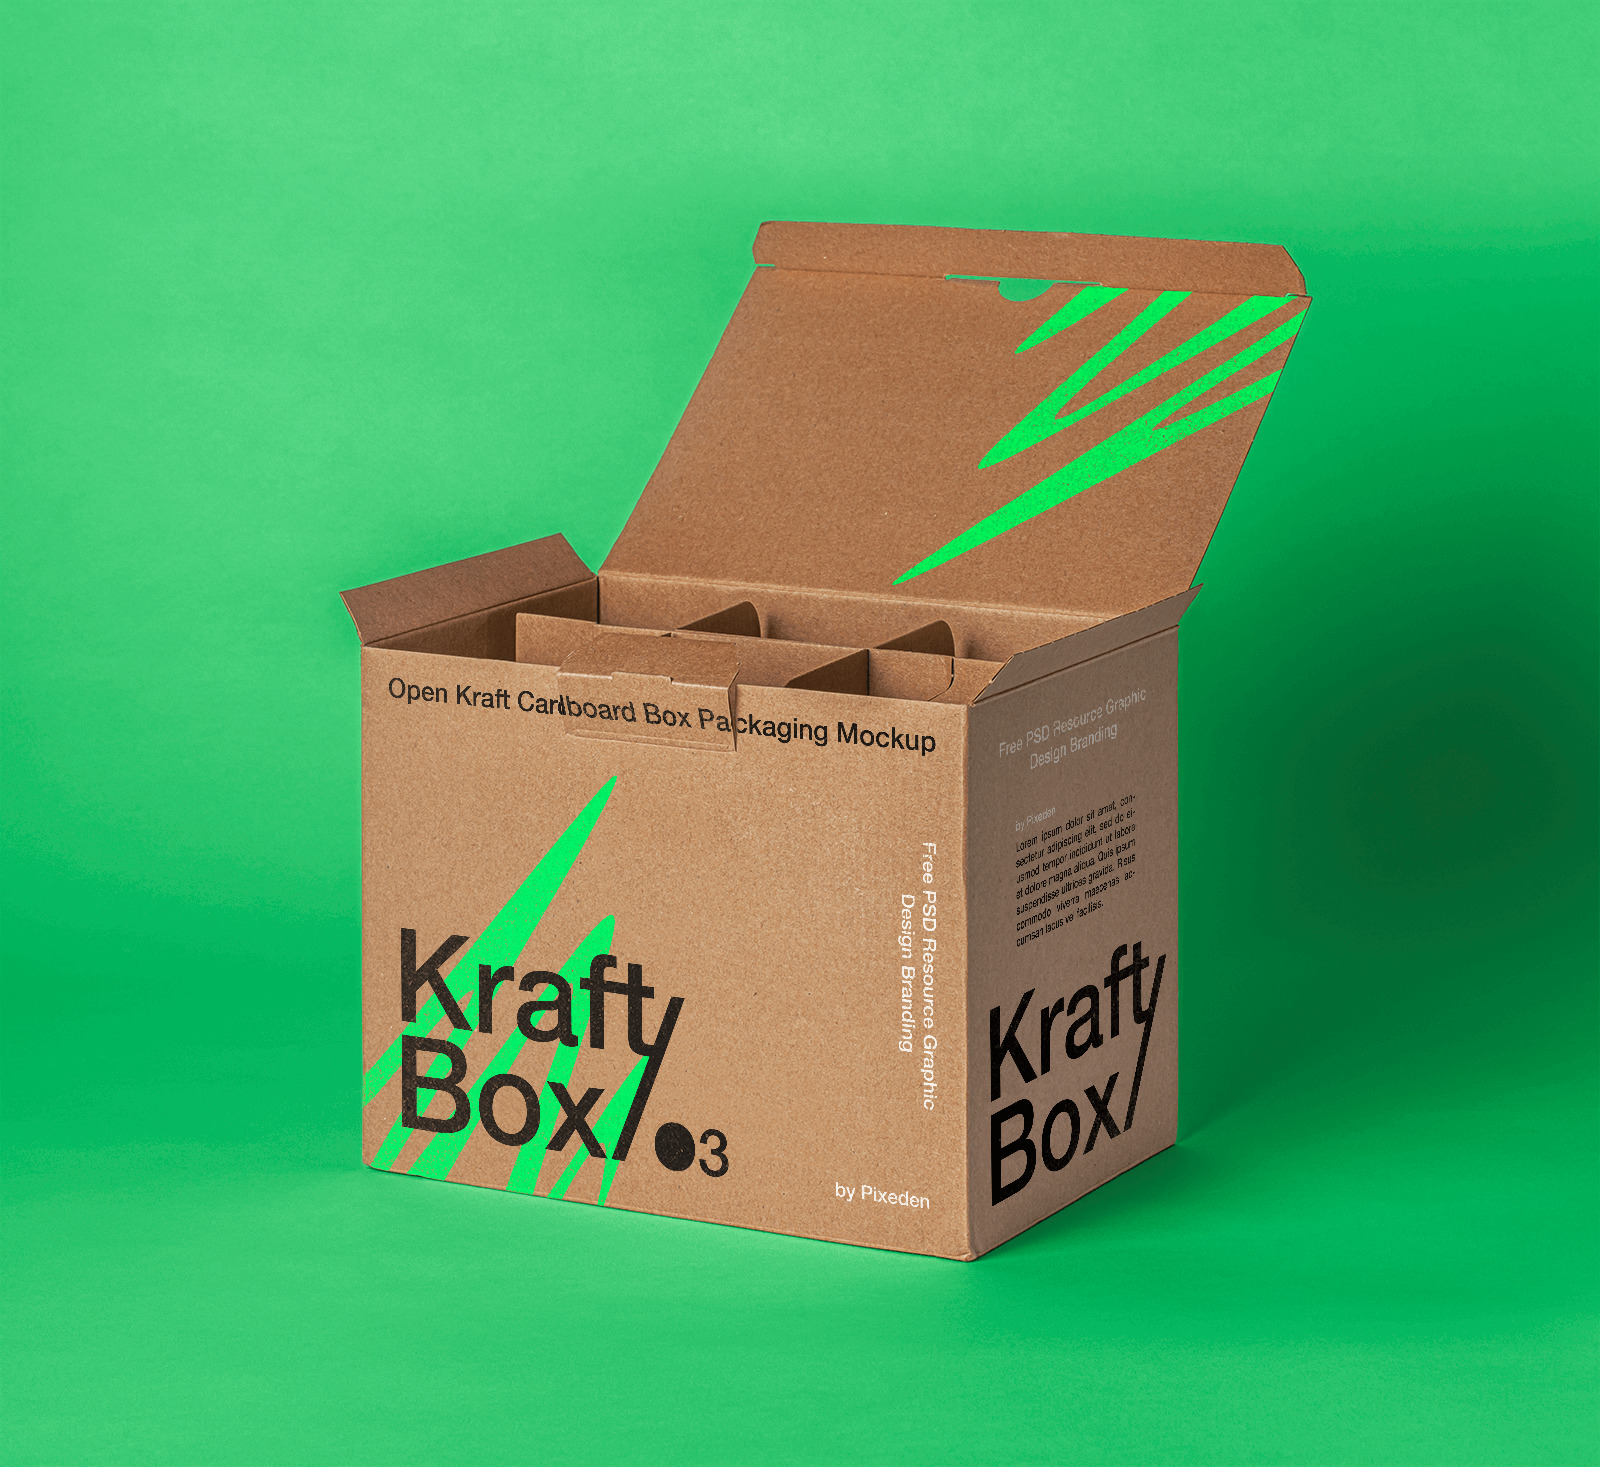 Free Bottle Carton Box Mockup